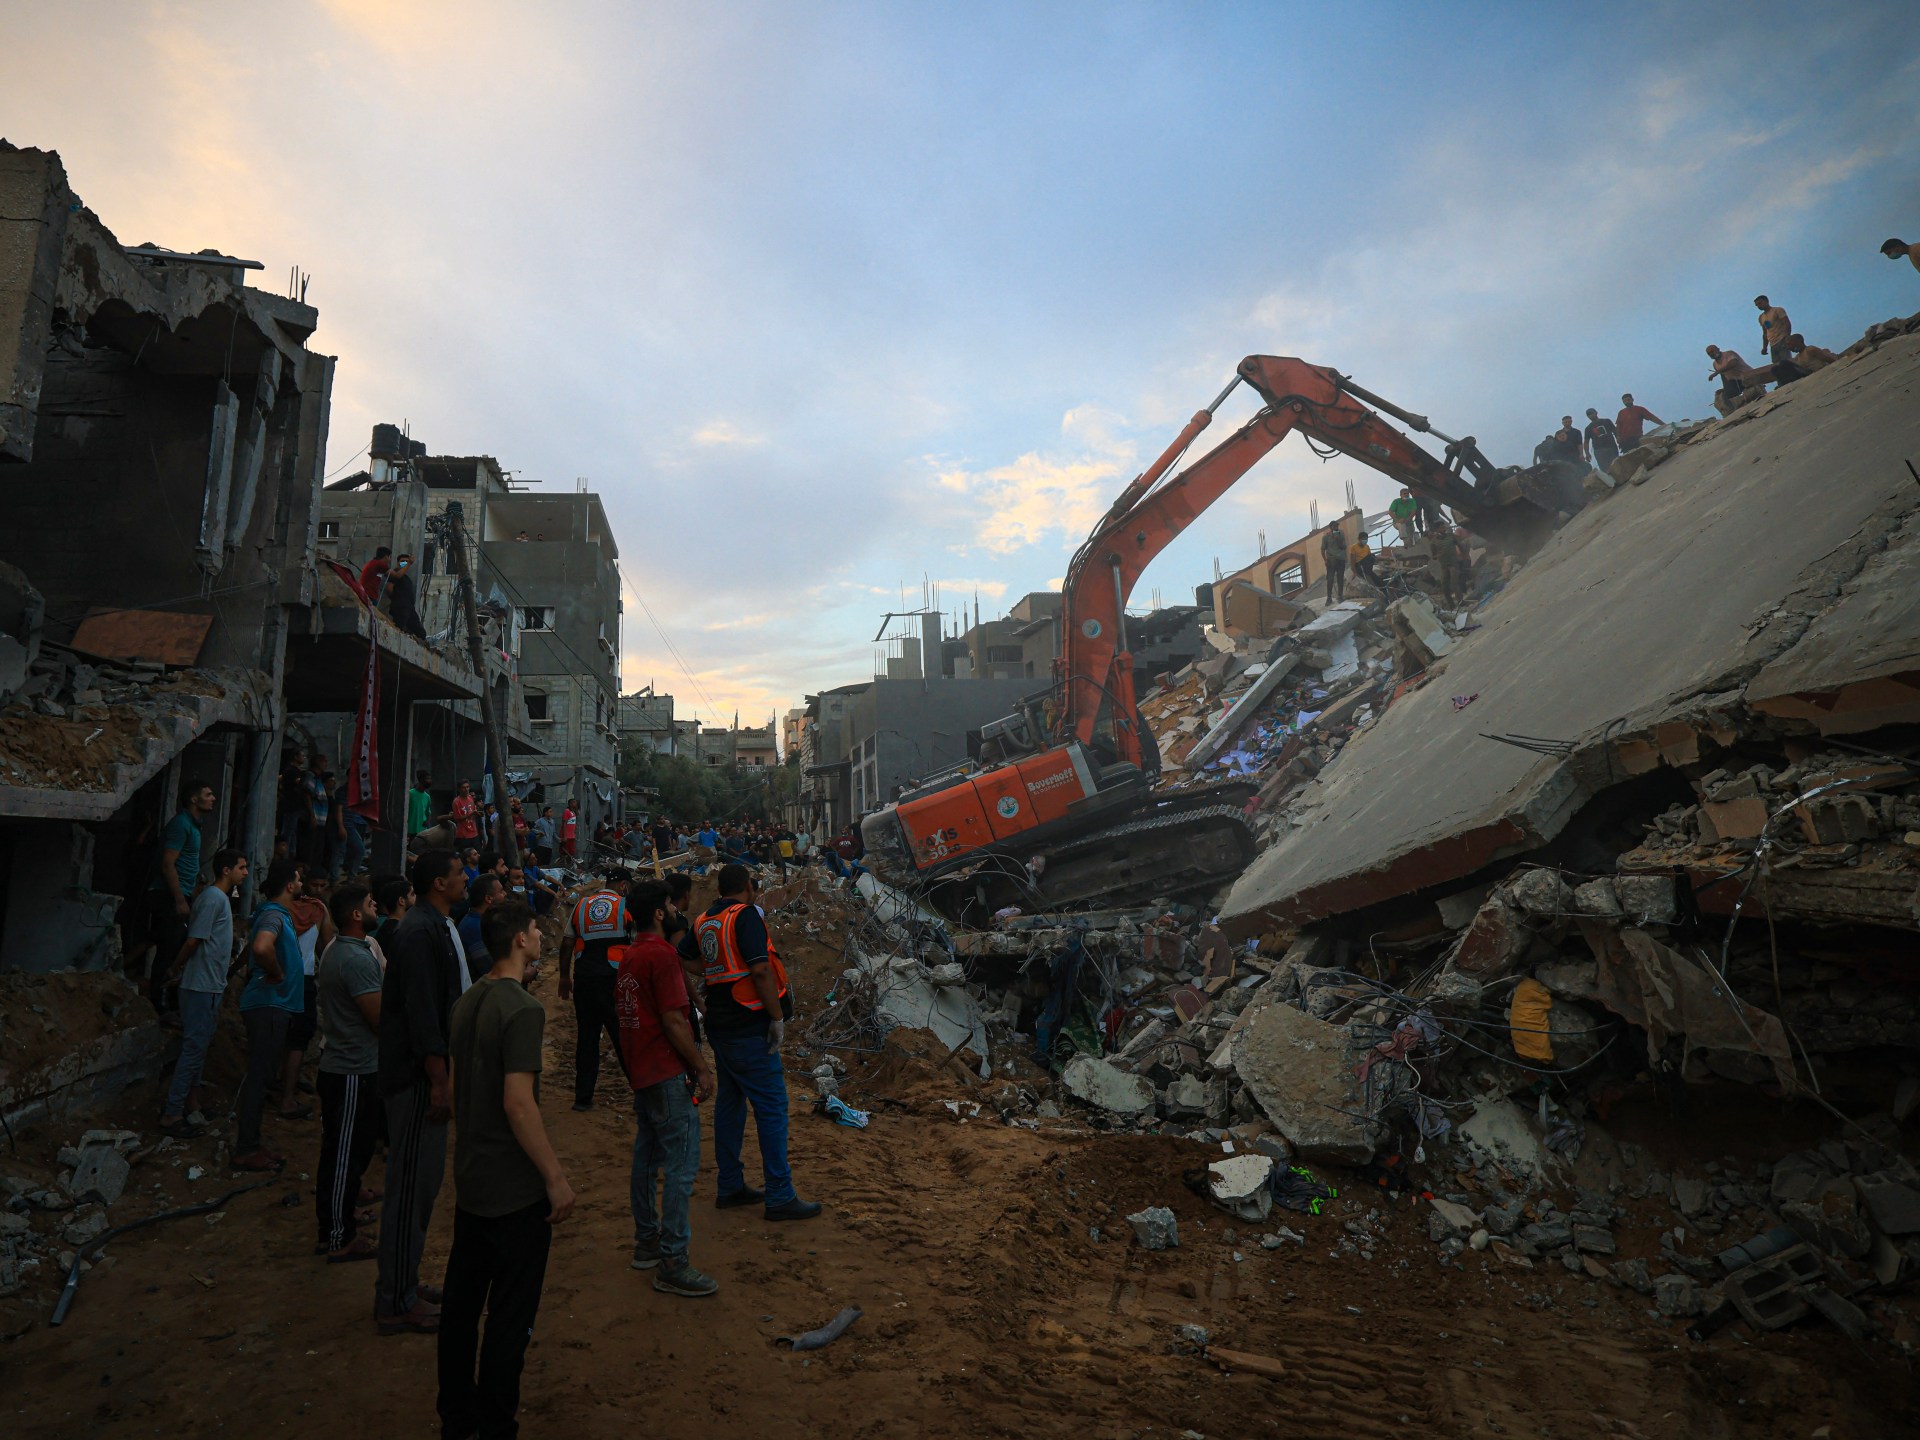 Israel strike that killed 106 people in Gaza ‘apparent war crime’: Probe | News